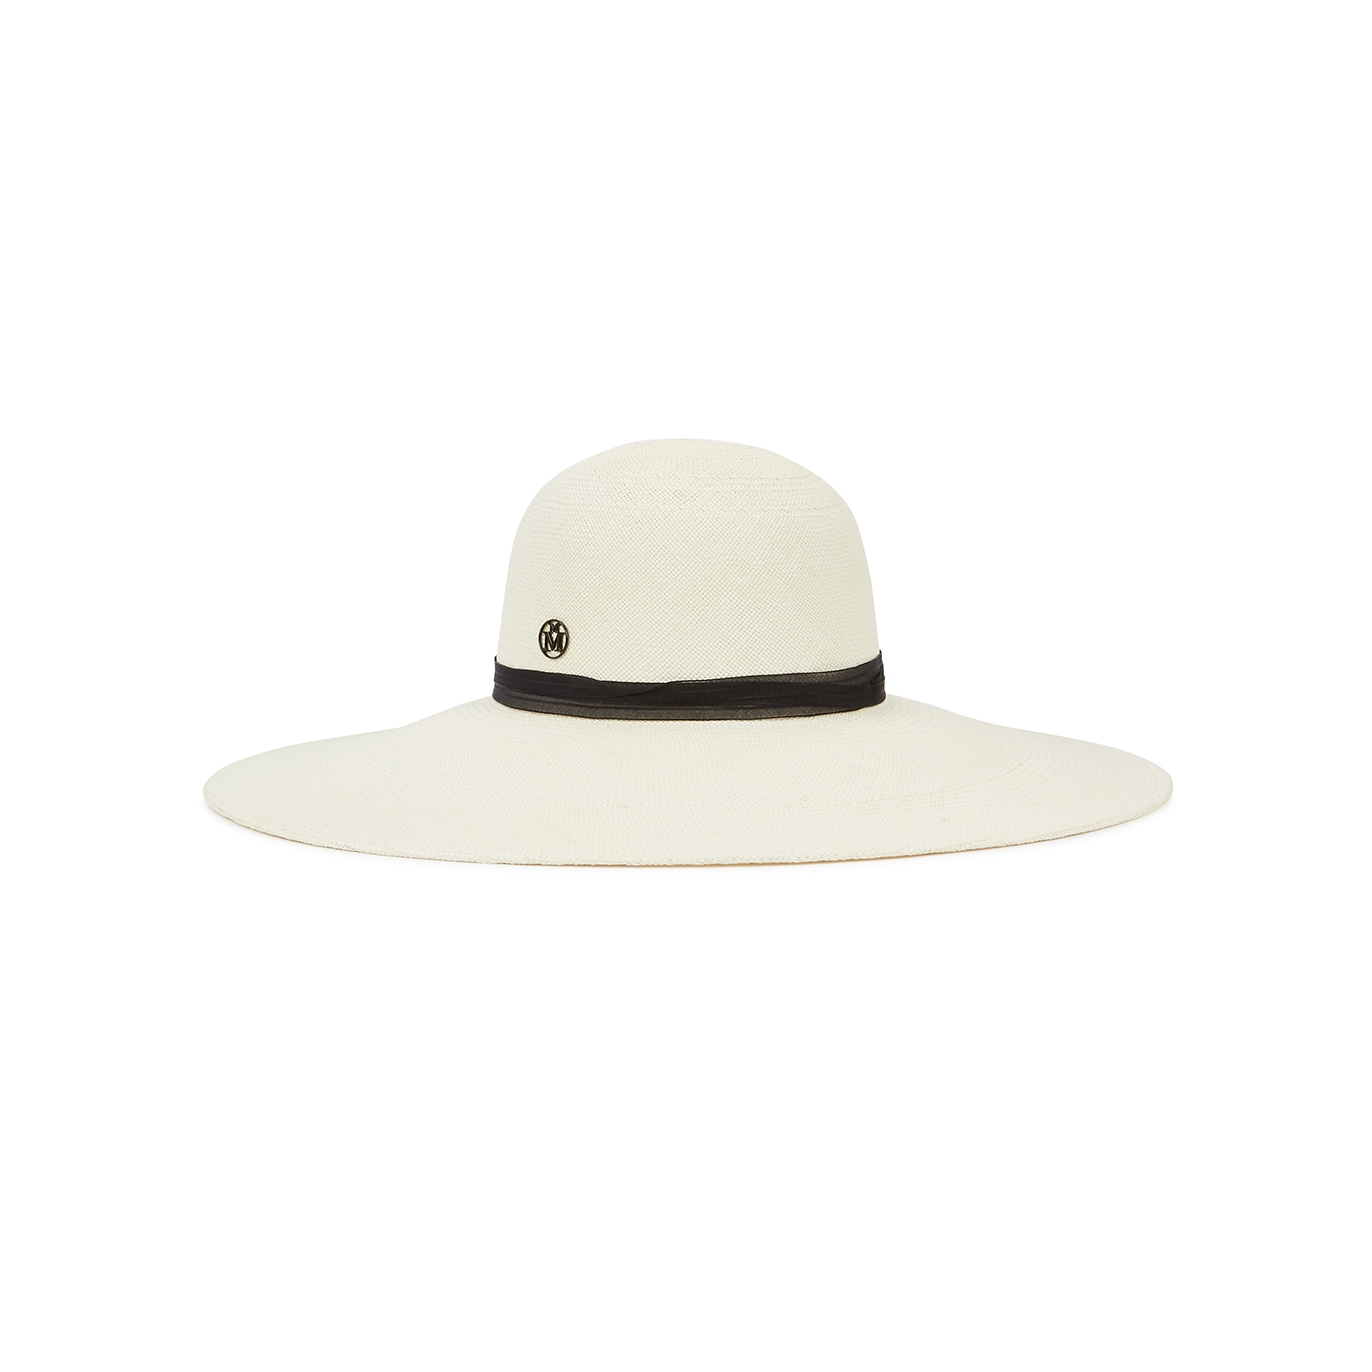 Maison Michel Paris Blanche Sand Straw Capeline Hat - White And Black